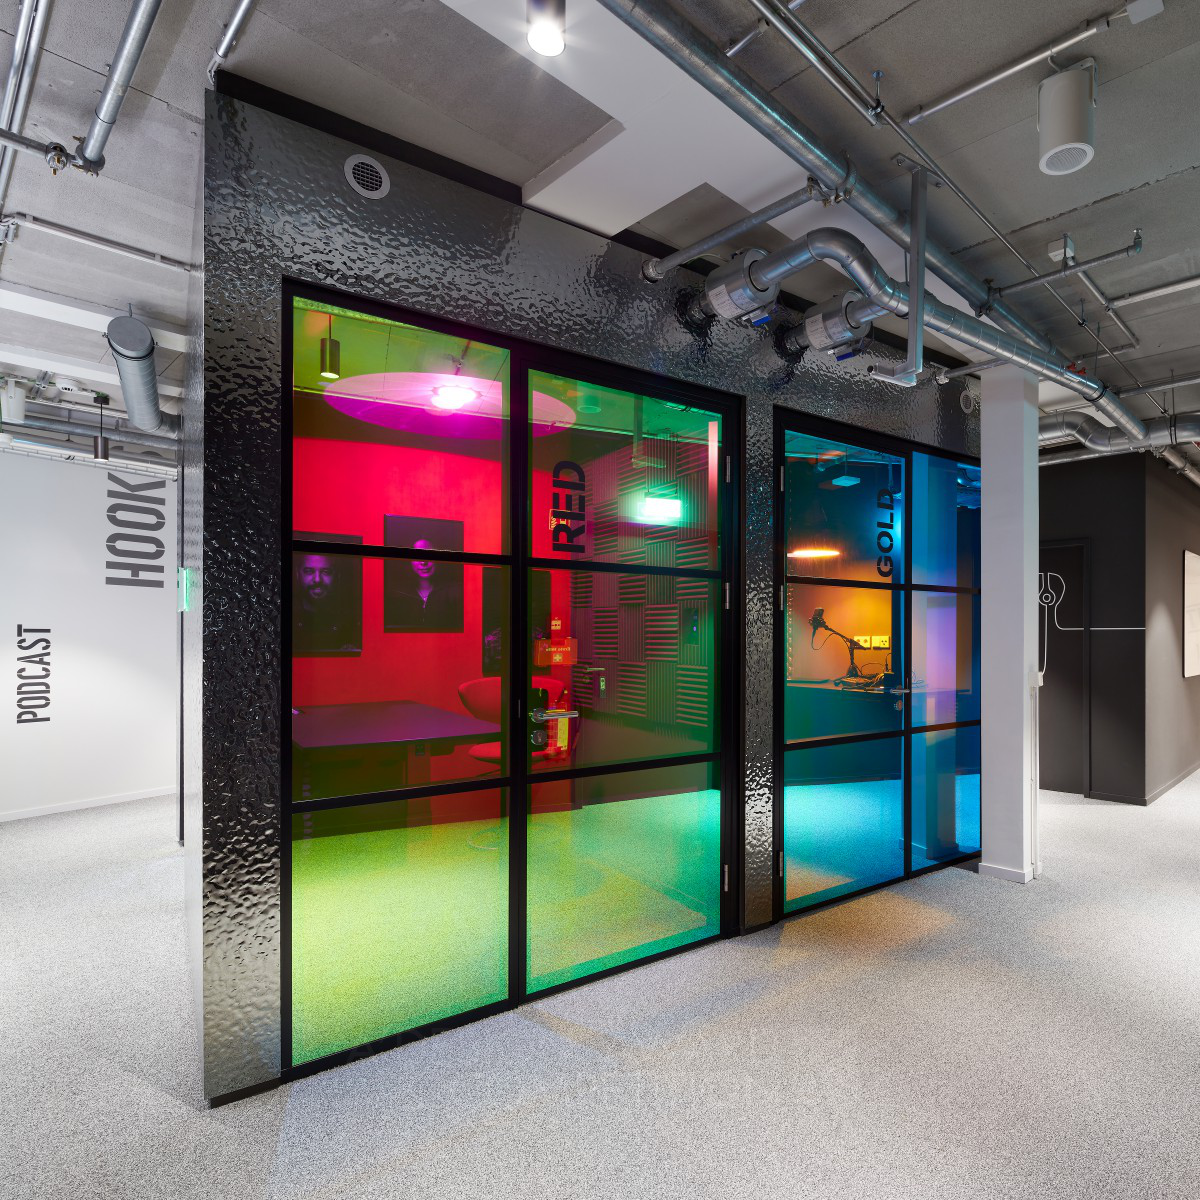 Rtl Audio Center Berlin by Evolution Design Silver Interior Space and Exhibition Design Award Winner 2021 